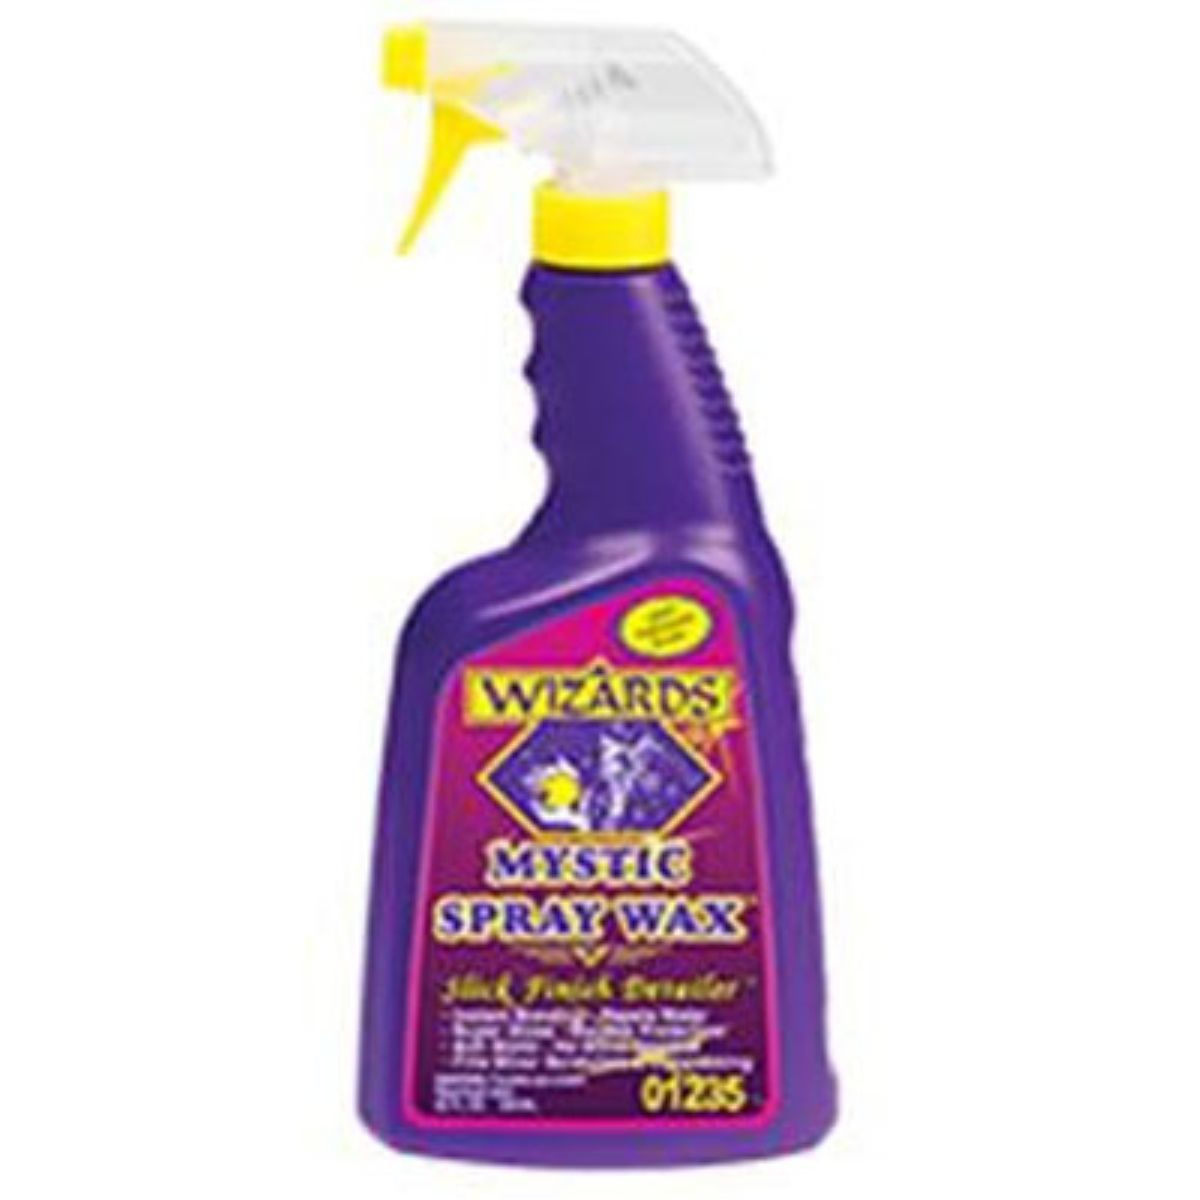 Mystic Spray Wax Slick Finish Detailer 22 Oz